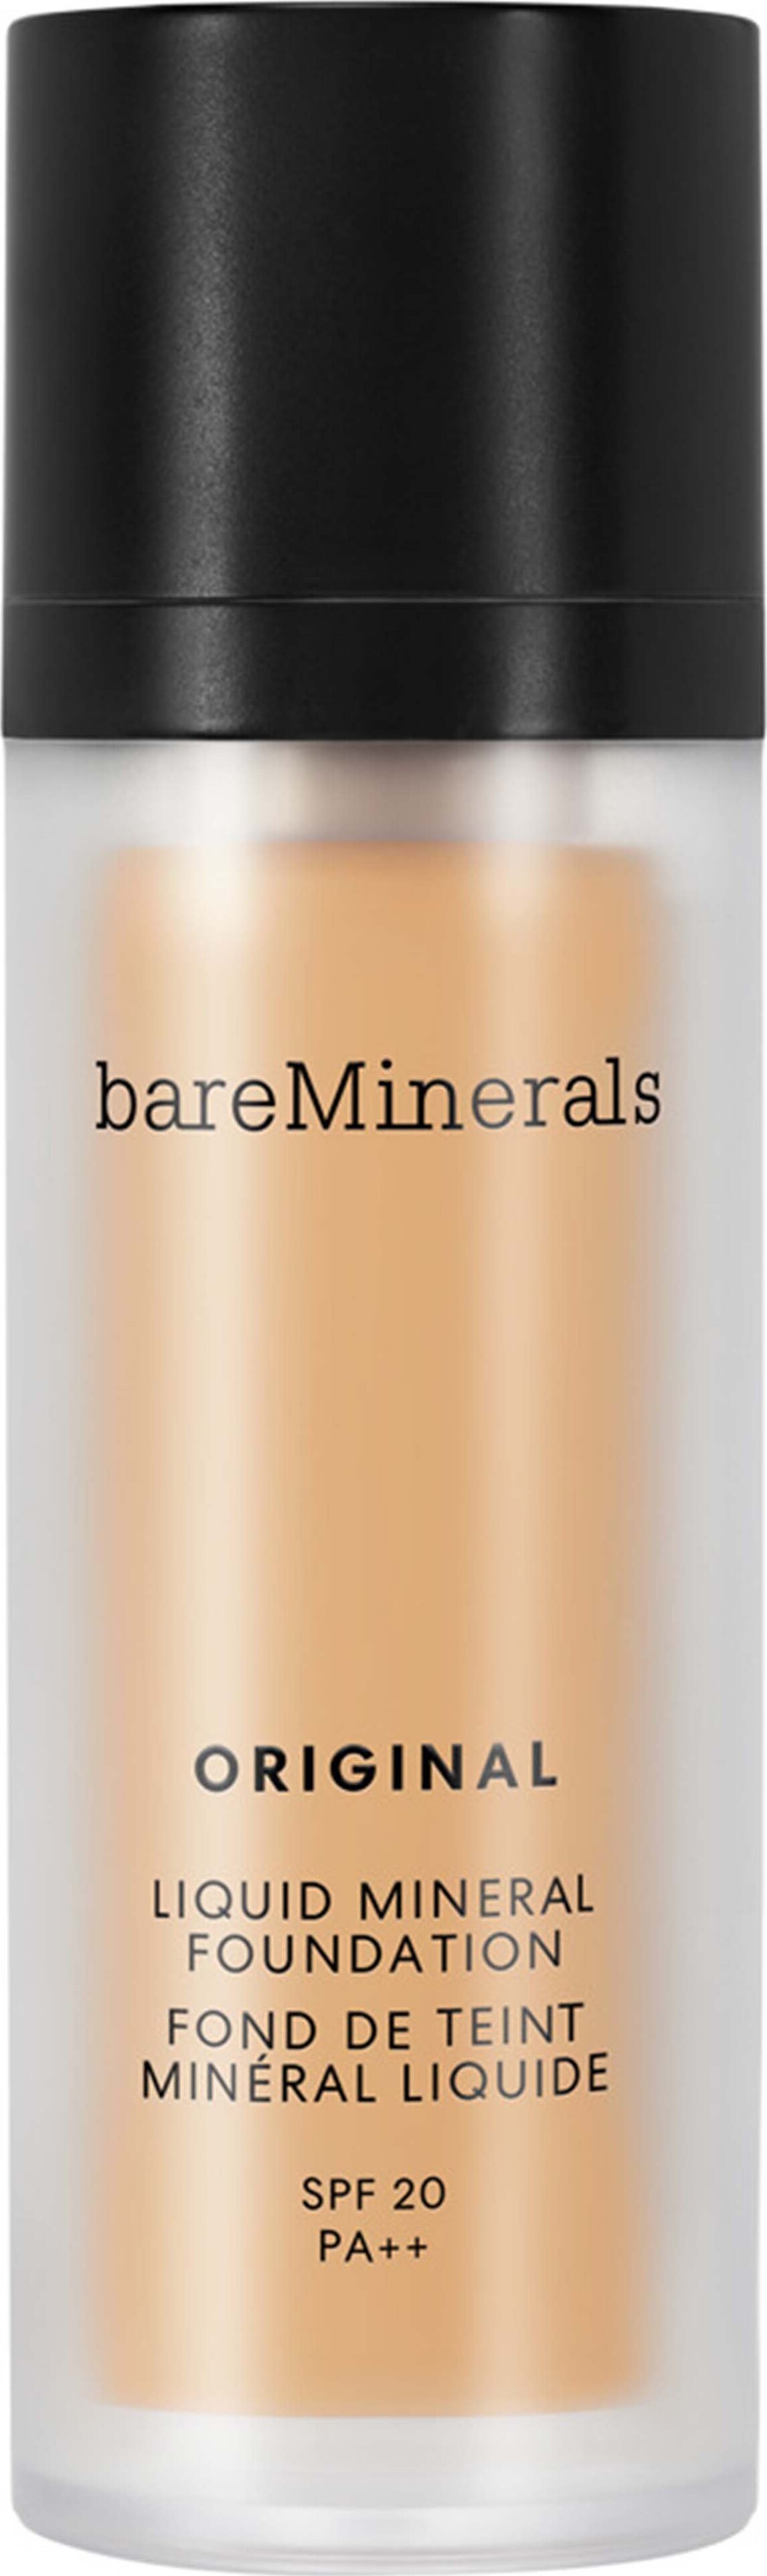 Bareminerals - Original Liquid Mineral Foundation - Medium Tan 18